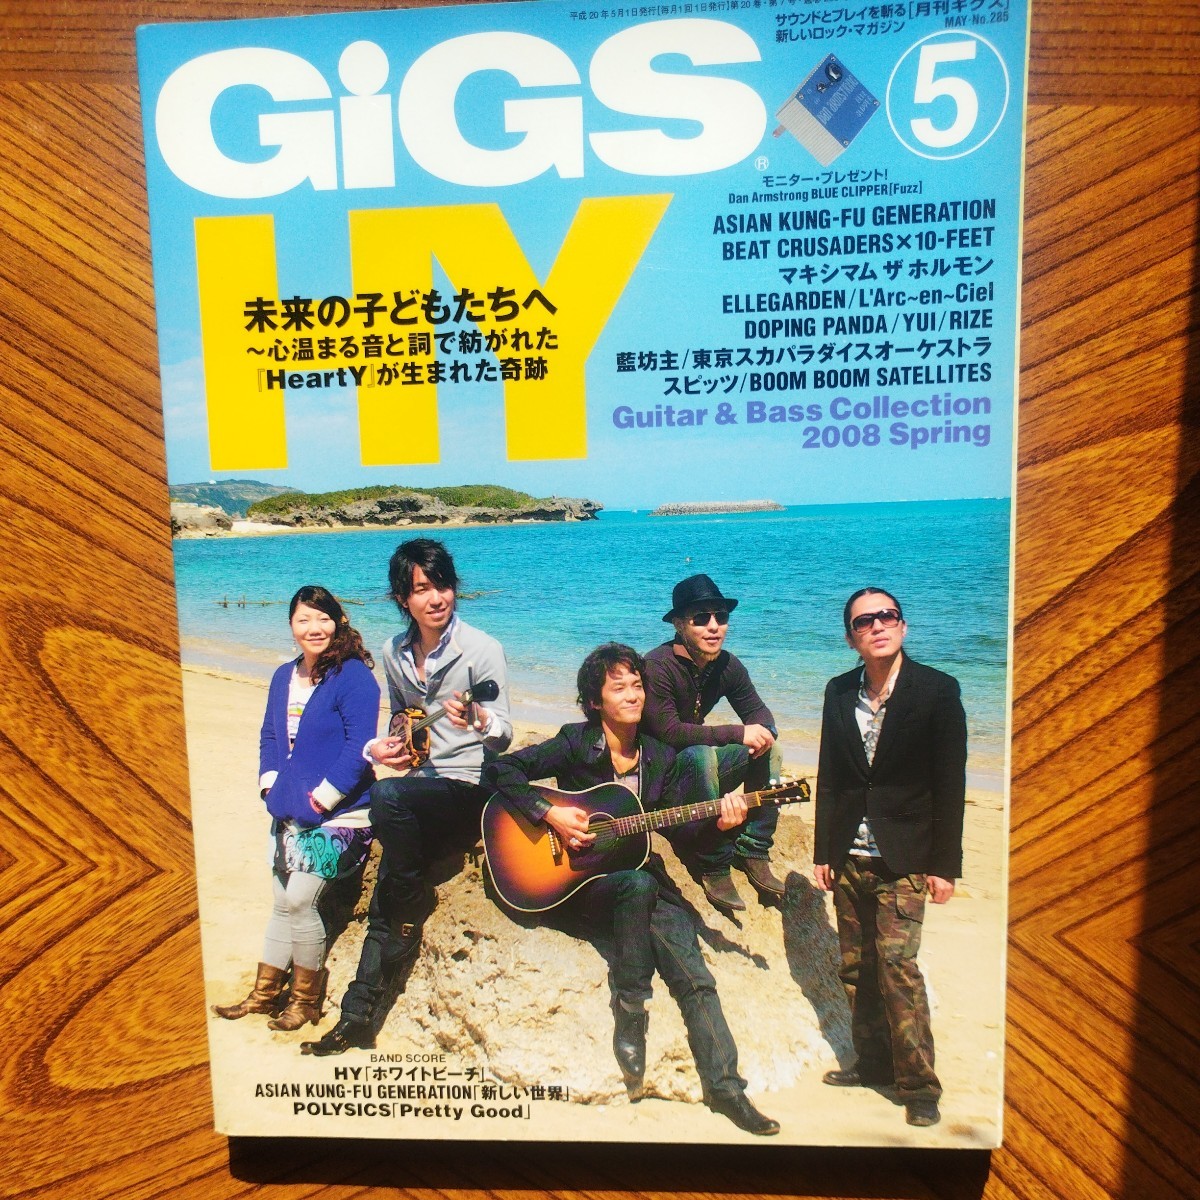 GiGS2008.5 No.285 HY/ASIAN KUNG-FU GENERATION/BEAT CRUSADERS/10-FEET/ гитара & основа коллекция 